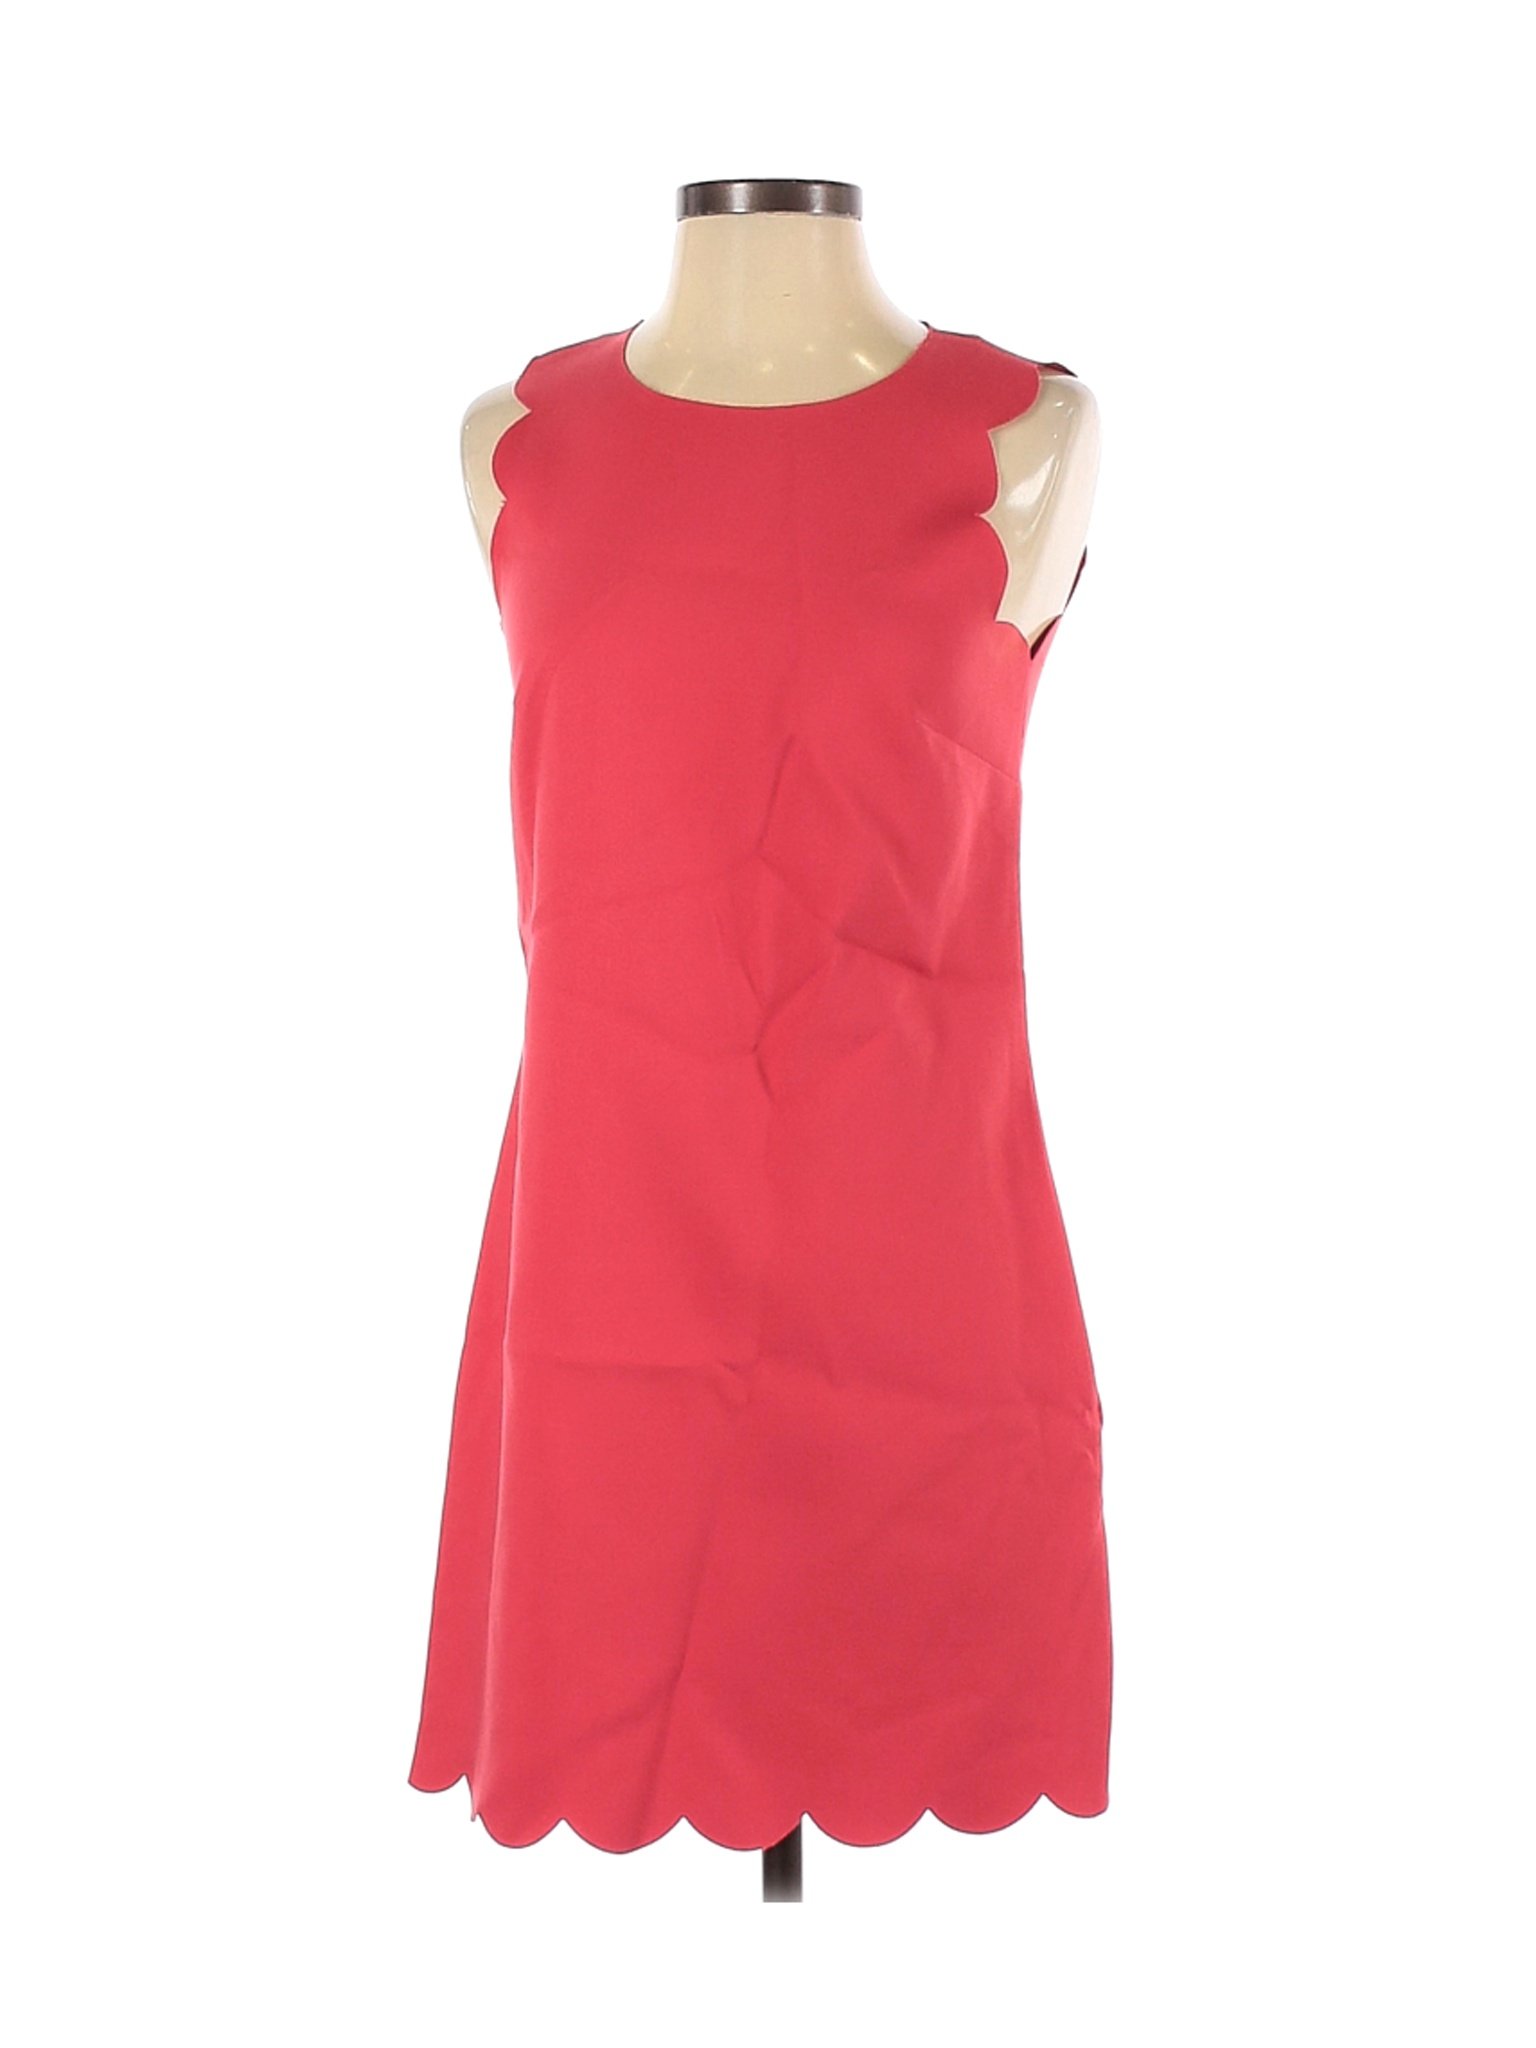 J.Crew Women Red Casual Dress 0 | eBay